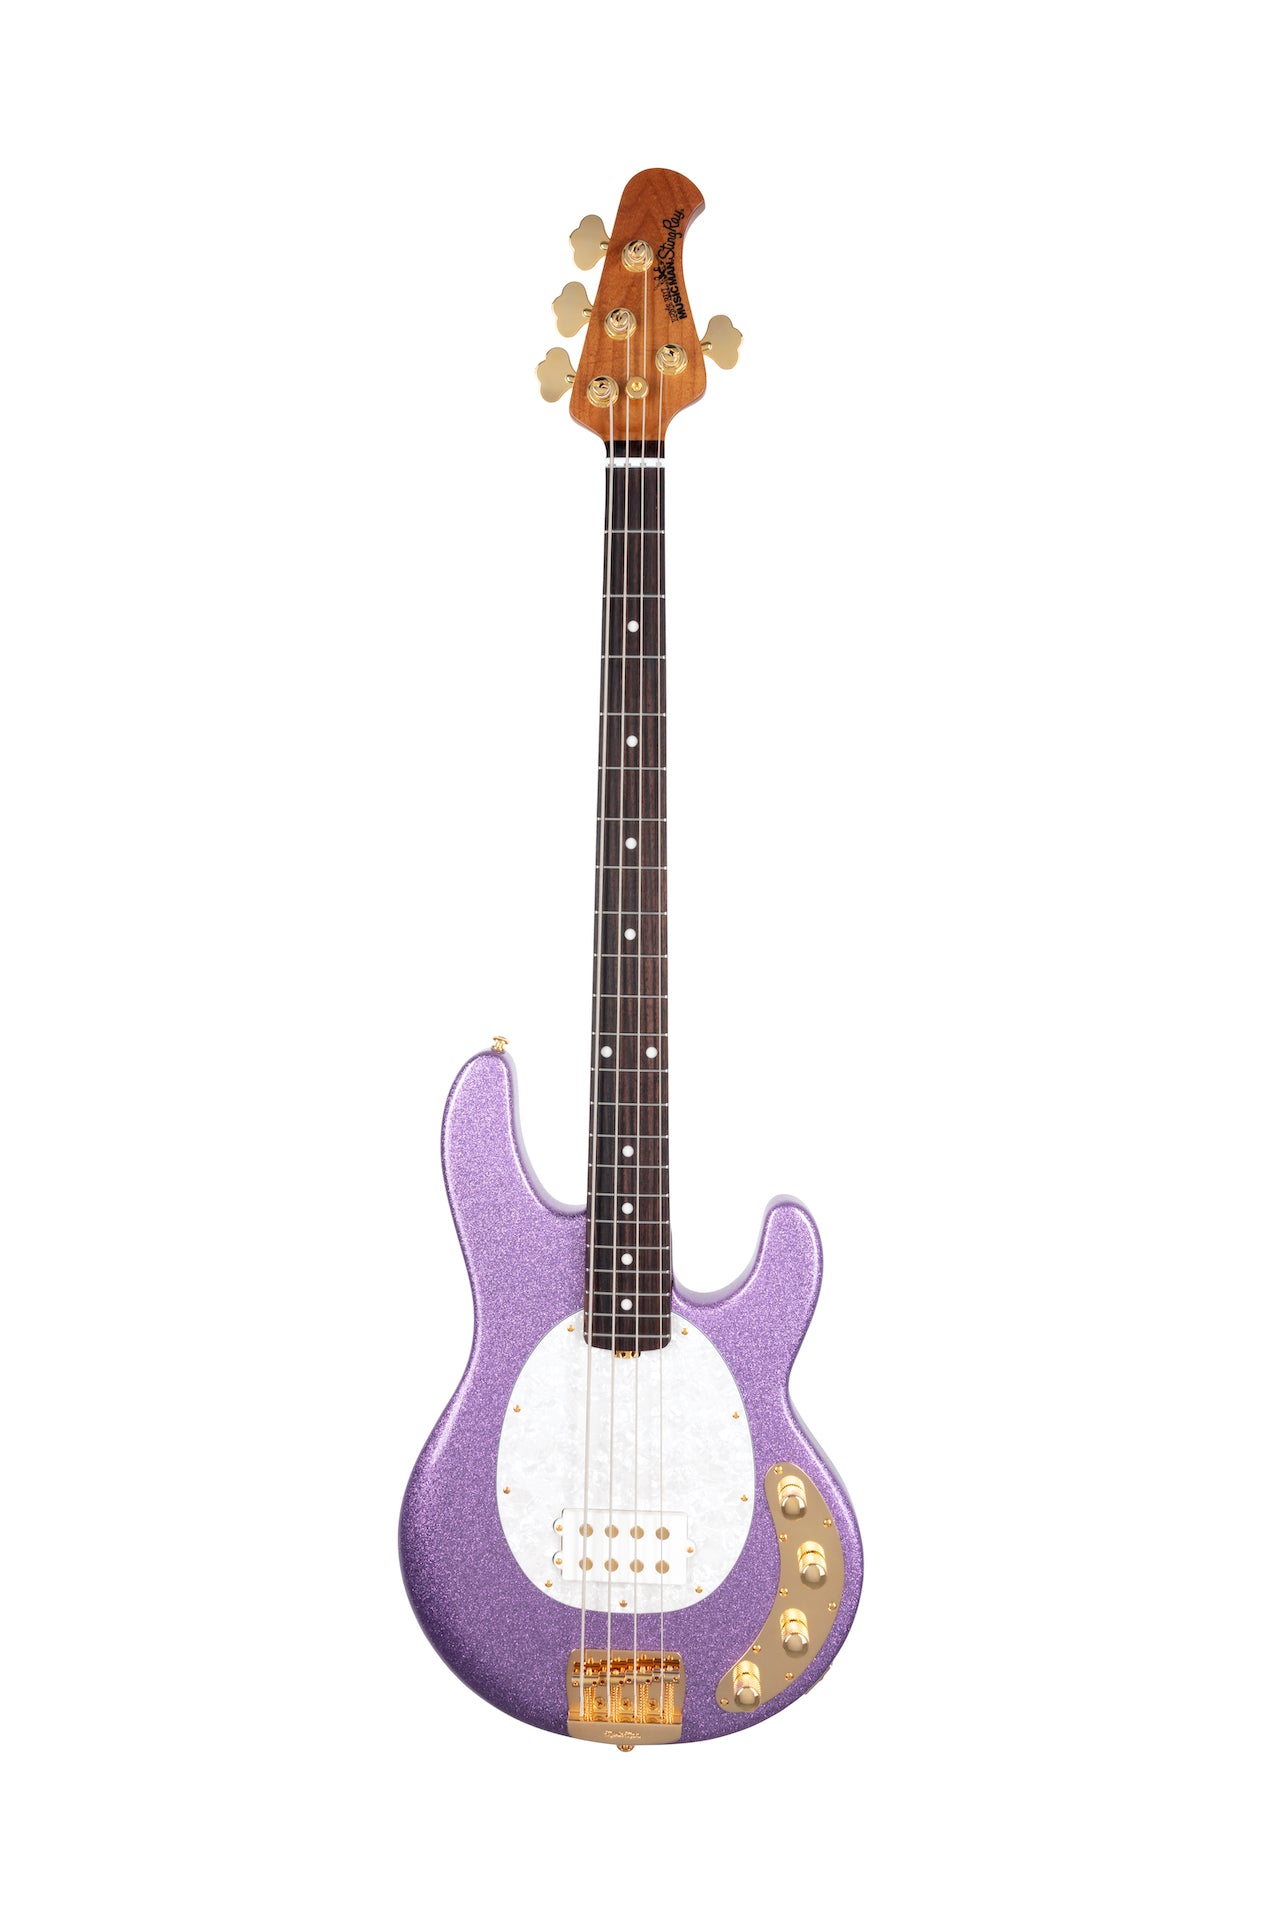 Ernie Ball Music Man StingRay Special 5 H Bass Guitar - Amethyst Sparkle with Rosewood Fingerboard F94930 - HIENDGUITAR   Musicman bass